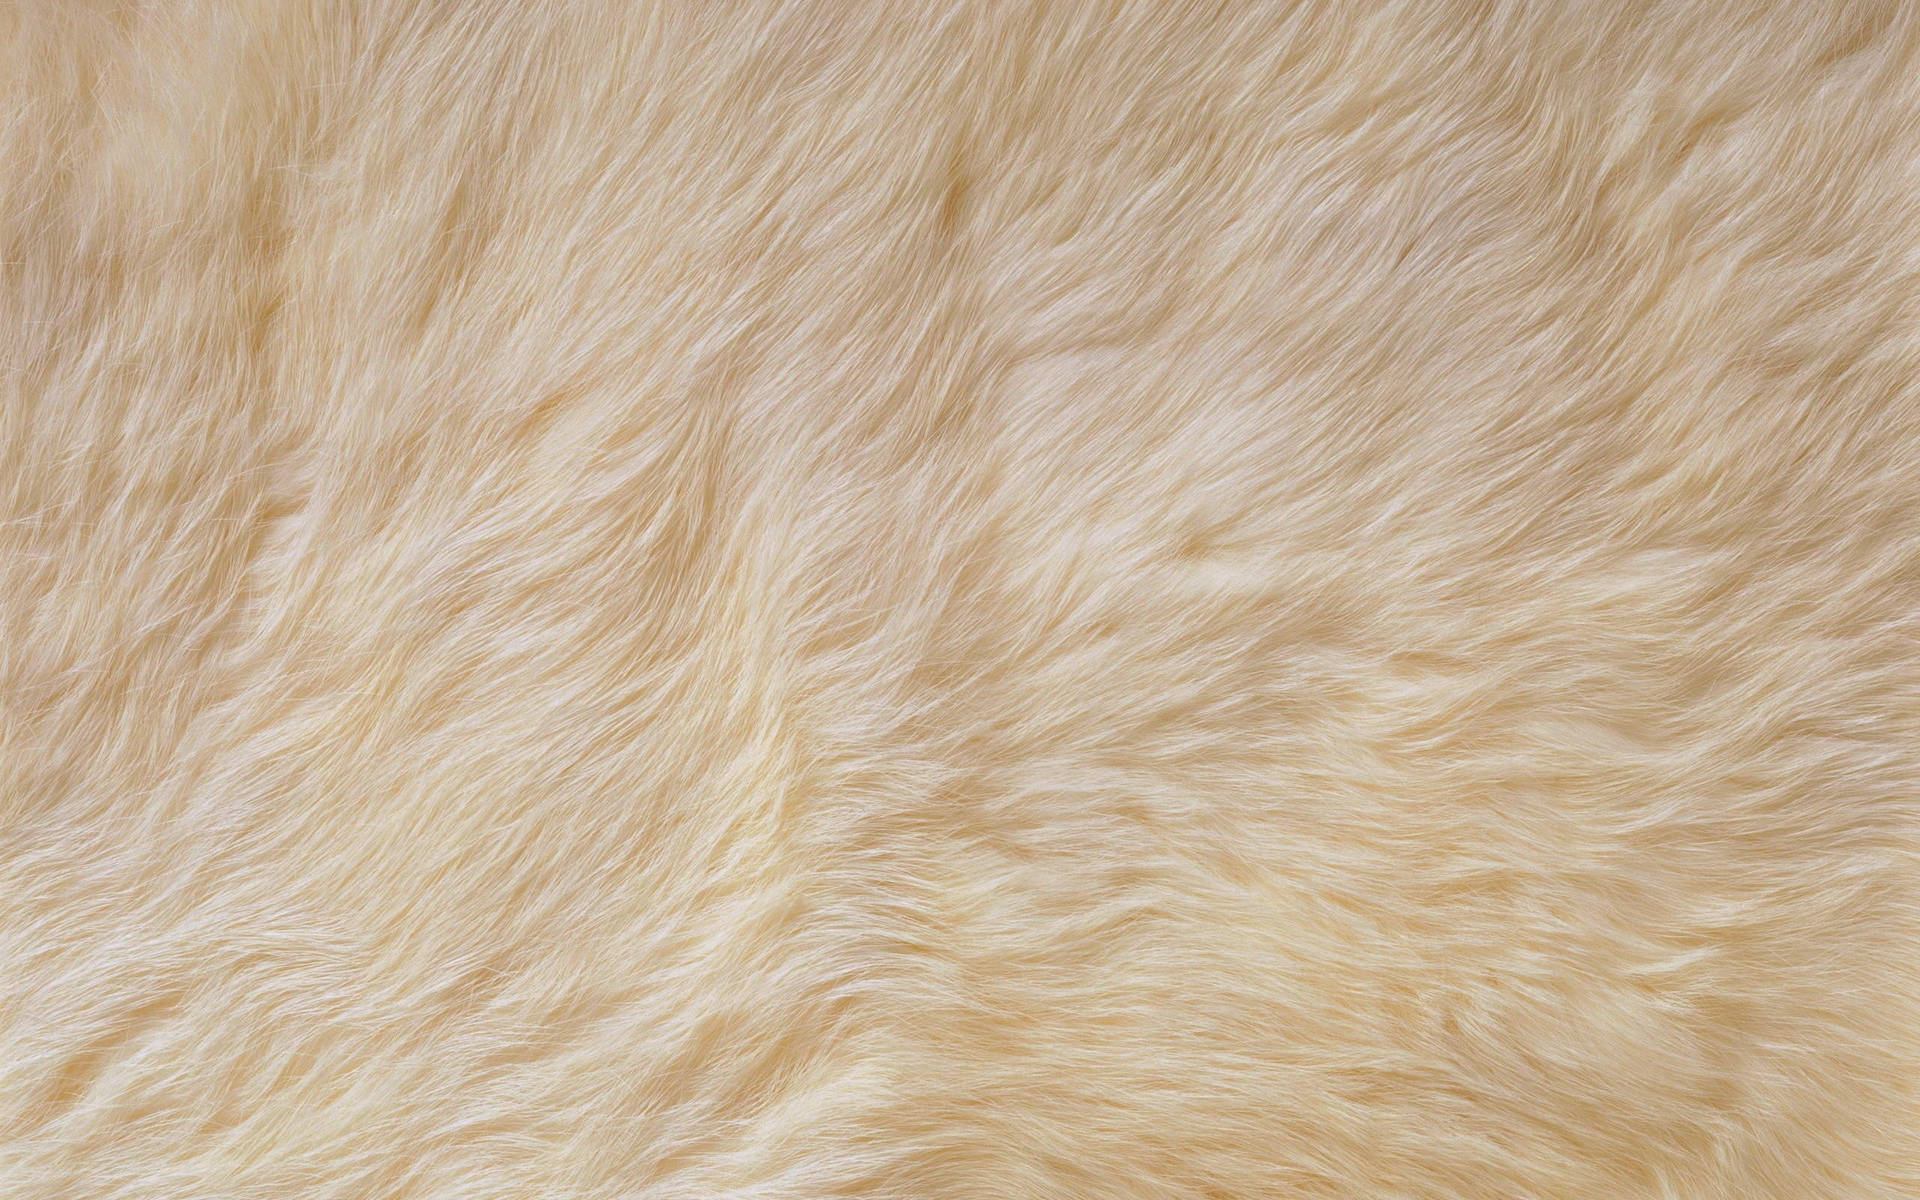 Soft Brown Fur Texture